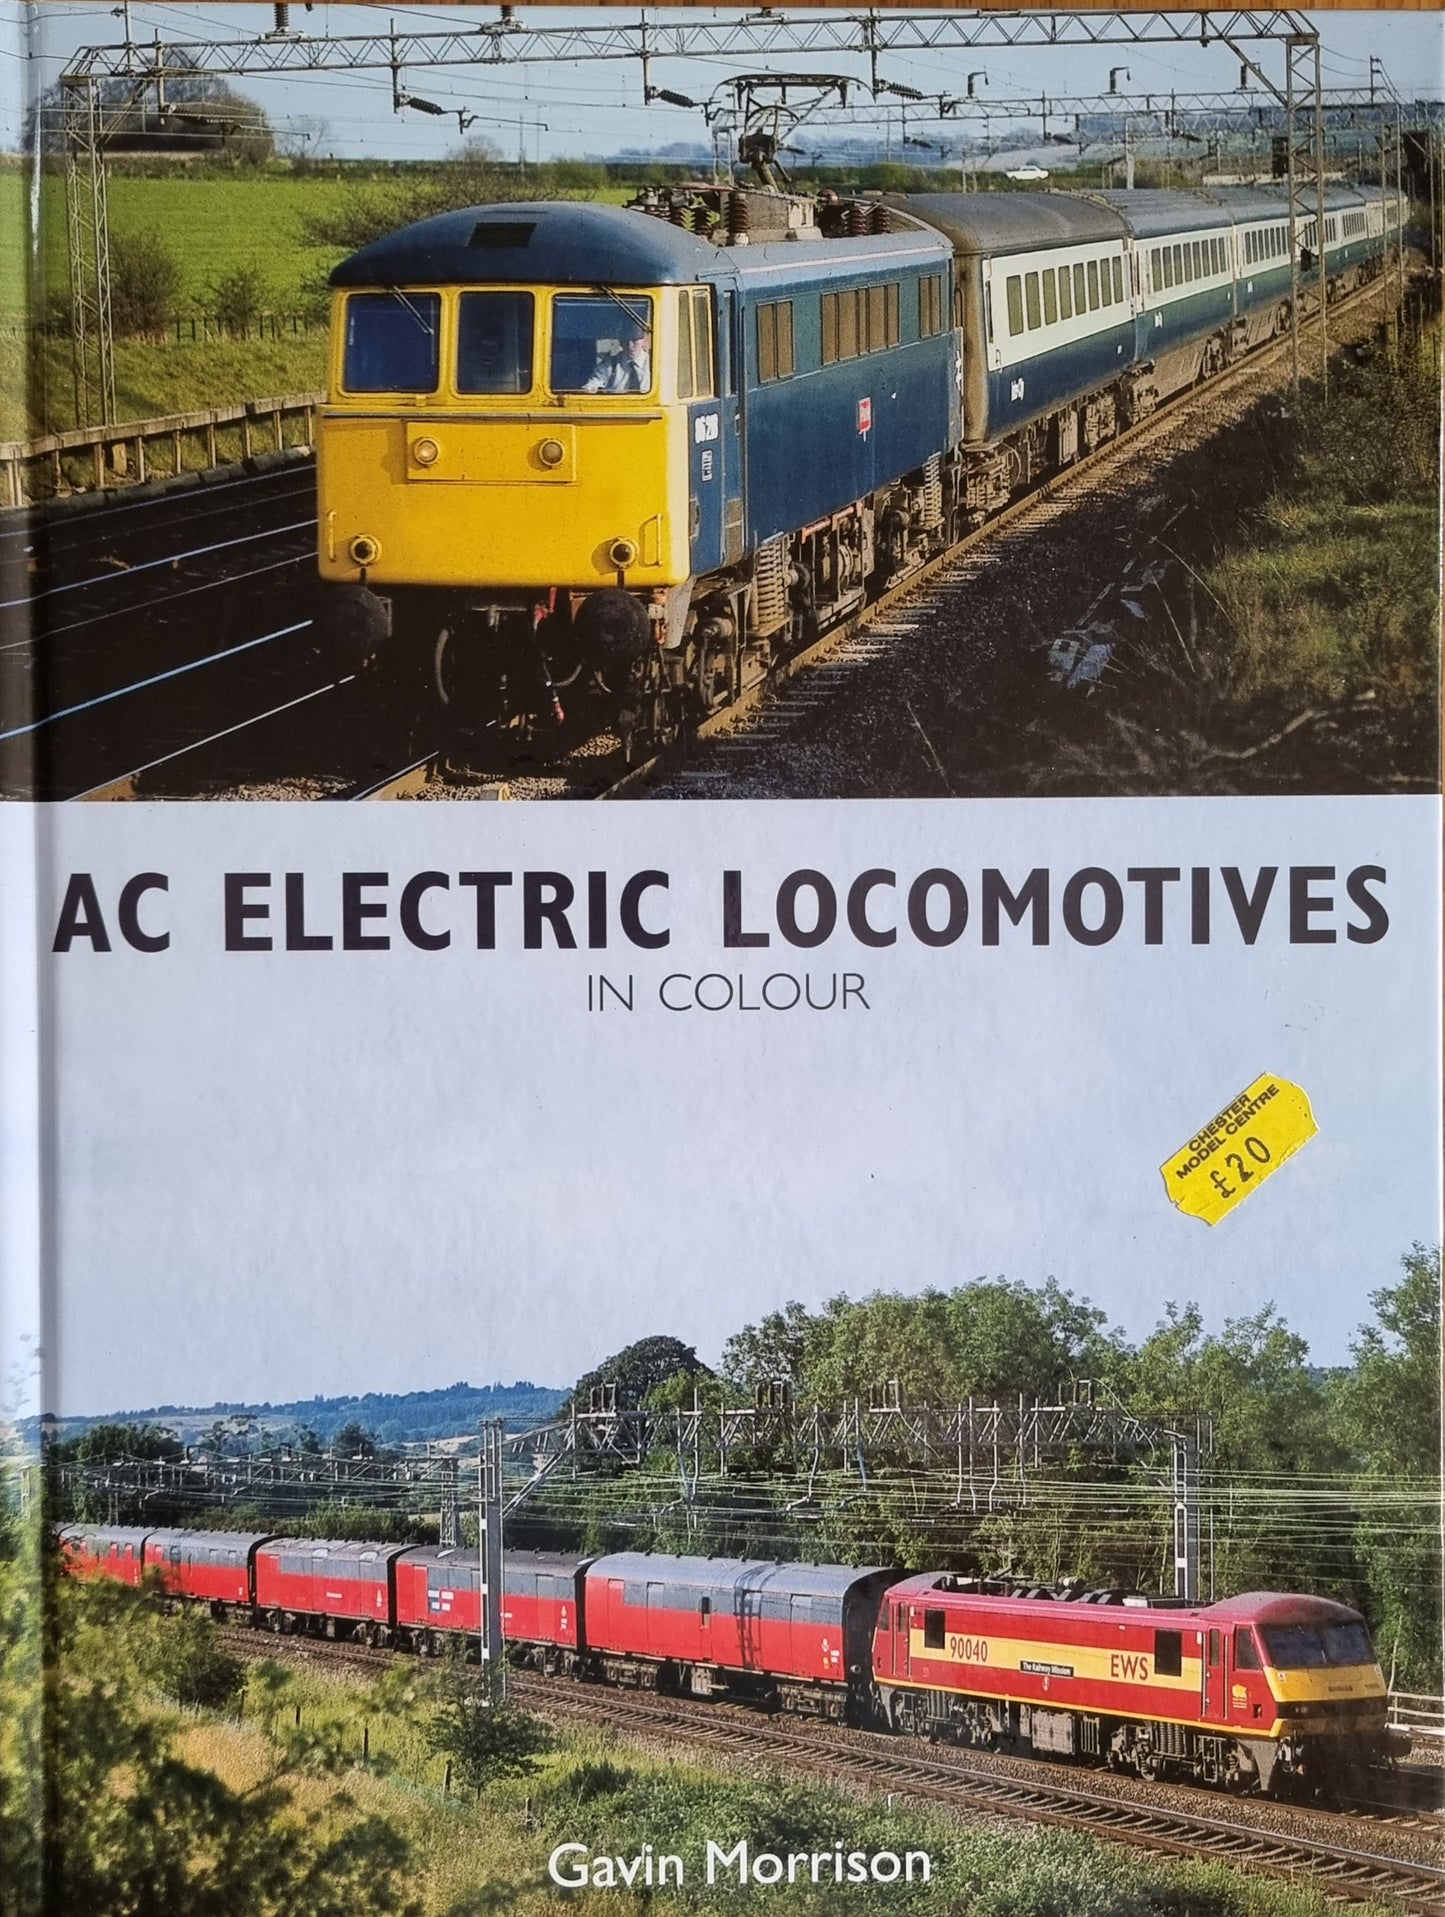 AC Electric Locomotives in Colour - Gavin Morrison - Chester Model Centre